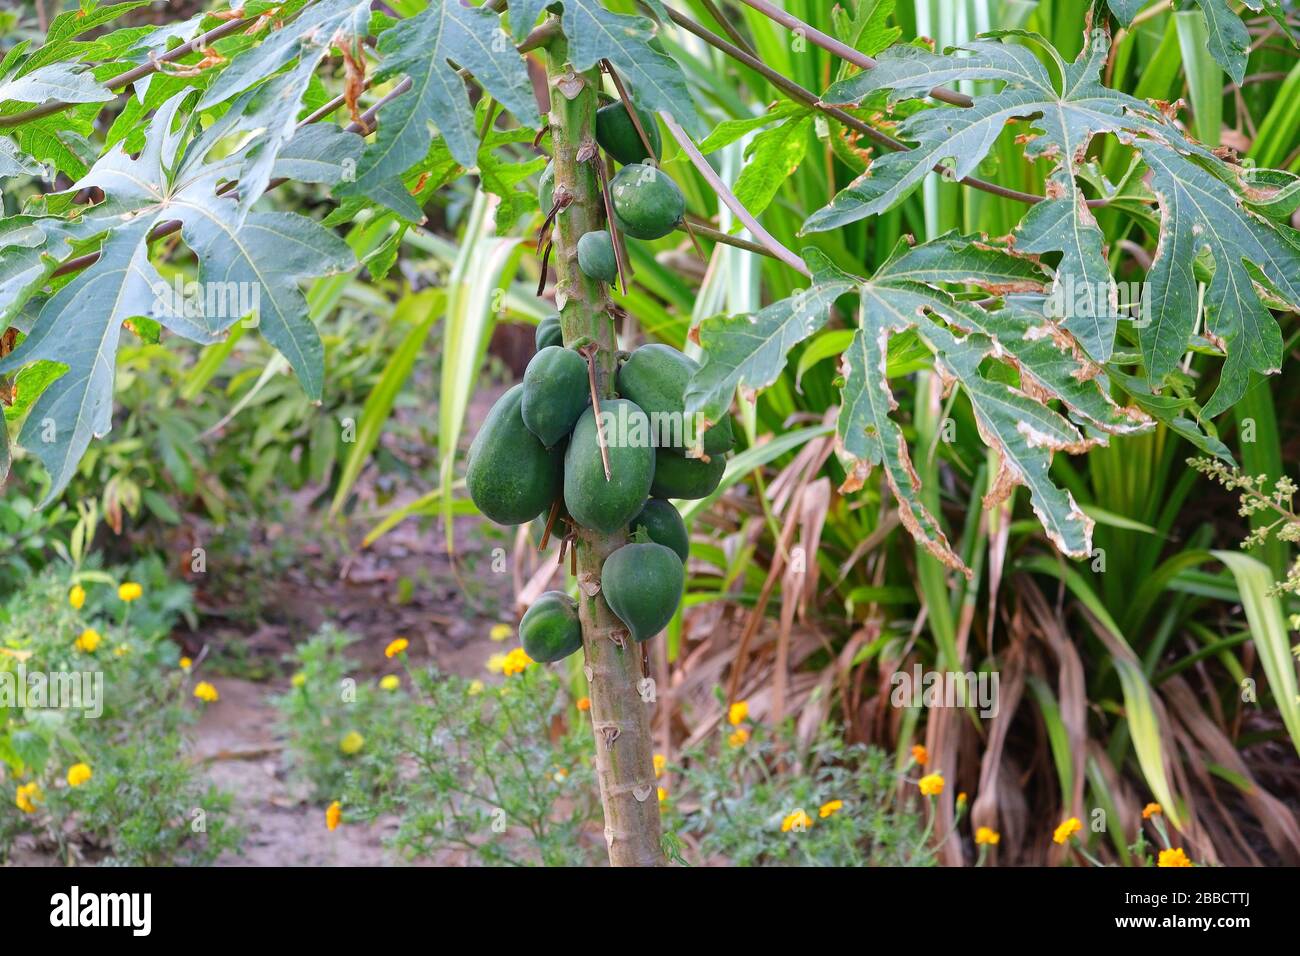 large group unripe papaya fruits growing on papaya tree in garden, concept for gardening Stock Photo